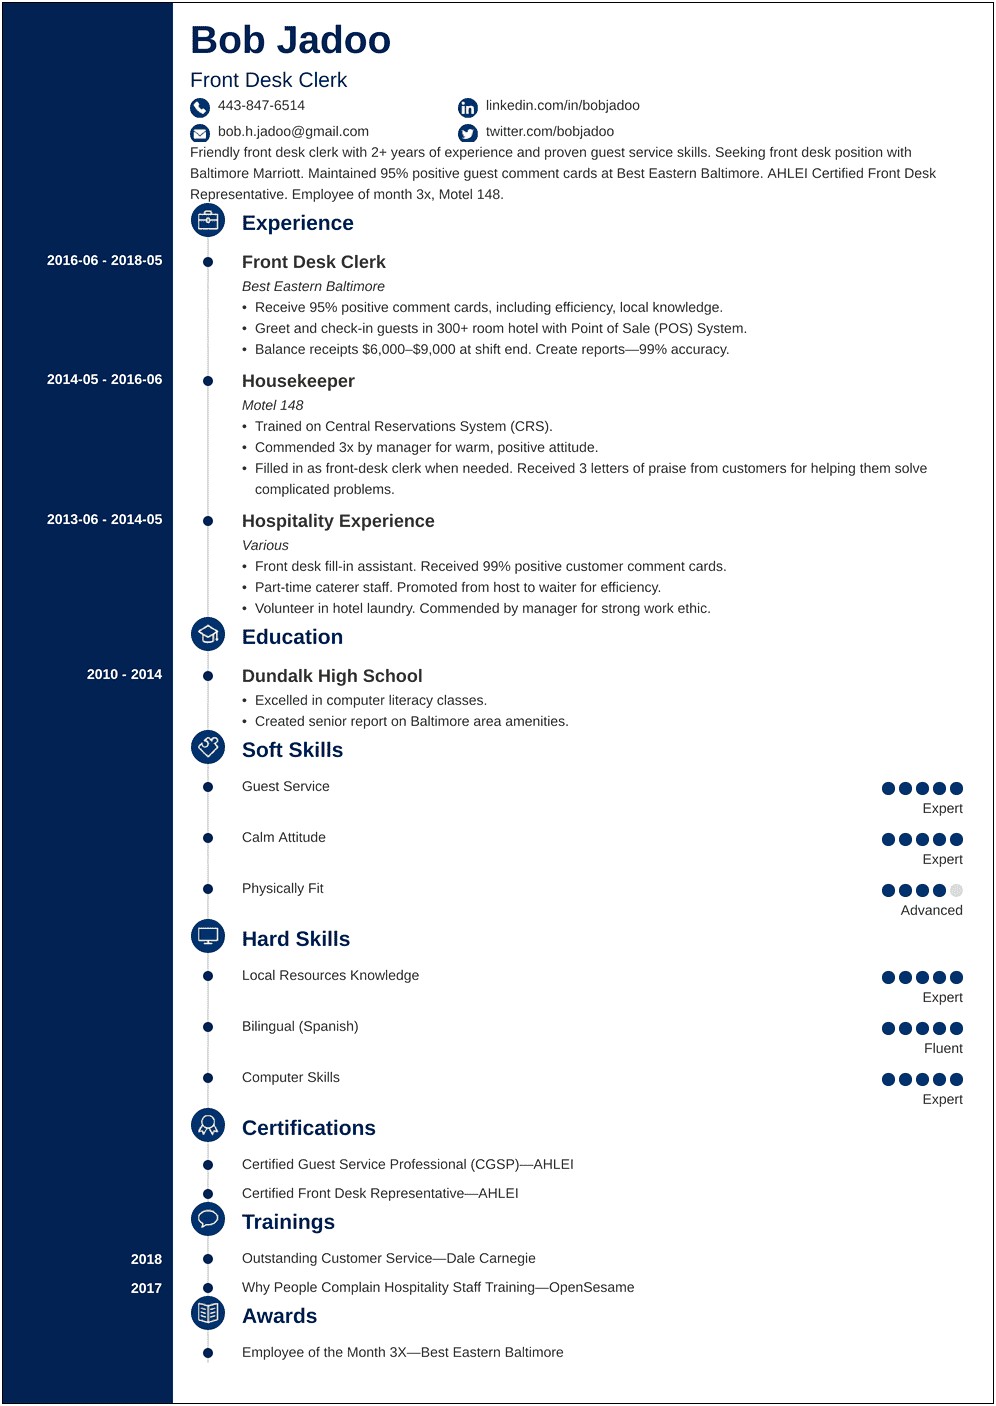 Sample Resume For Hotel Management Job